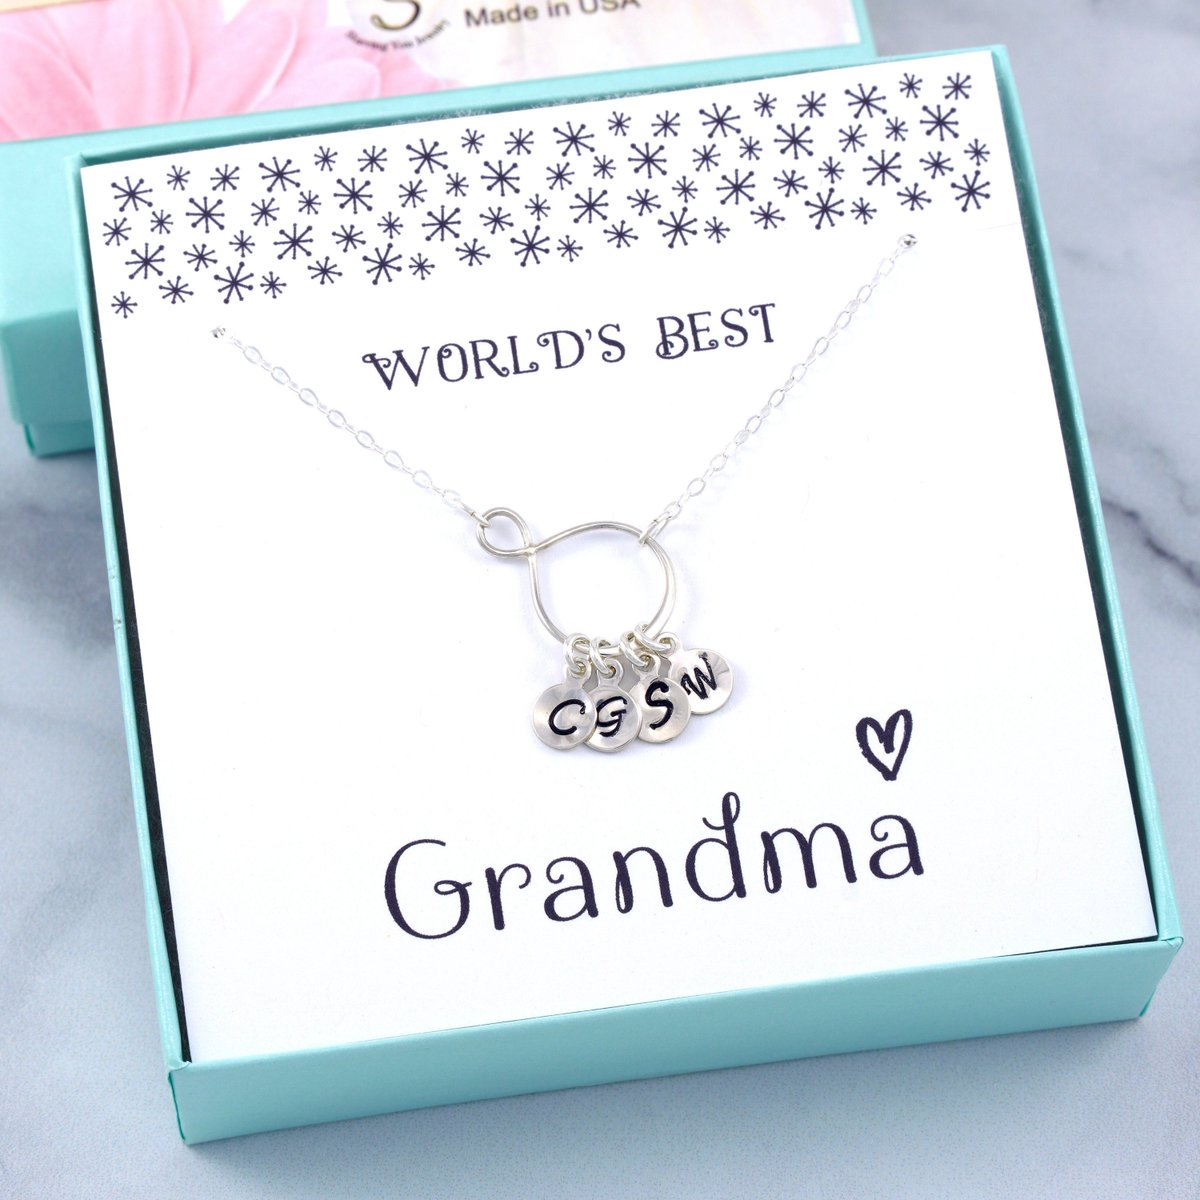 Grandma Necklace | Personalized Grandma Gifts | Grandma Birthday Gift | New Grandma Gift | Made in USA tuppu.net/6dc594bc #shopsmall #Etsy #giftideas #etsyfinds #giftsforher #etsyjewelry #etsygifts #etsyseller #handmadejewelry #etsyshop